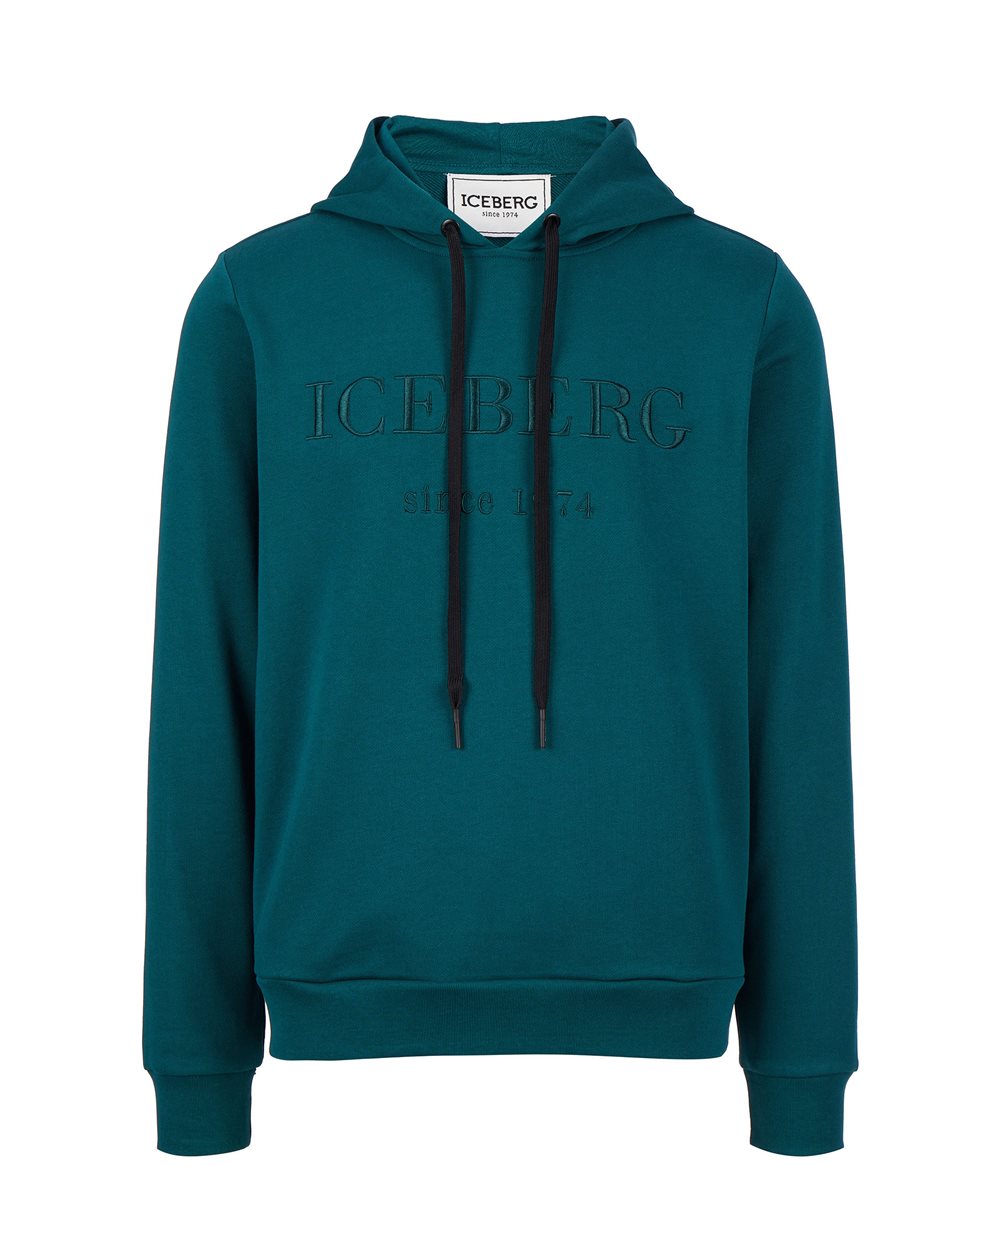 Sweatshirt with hood and logo - MAN | Iceberg - Official Website